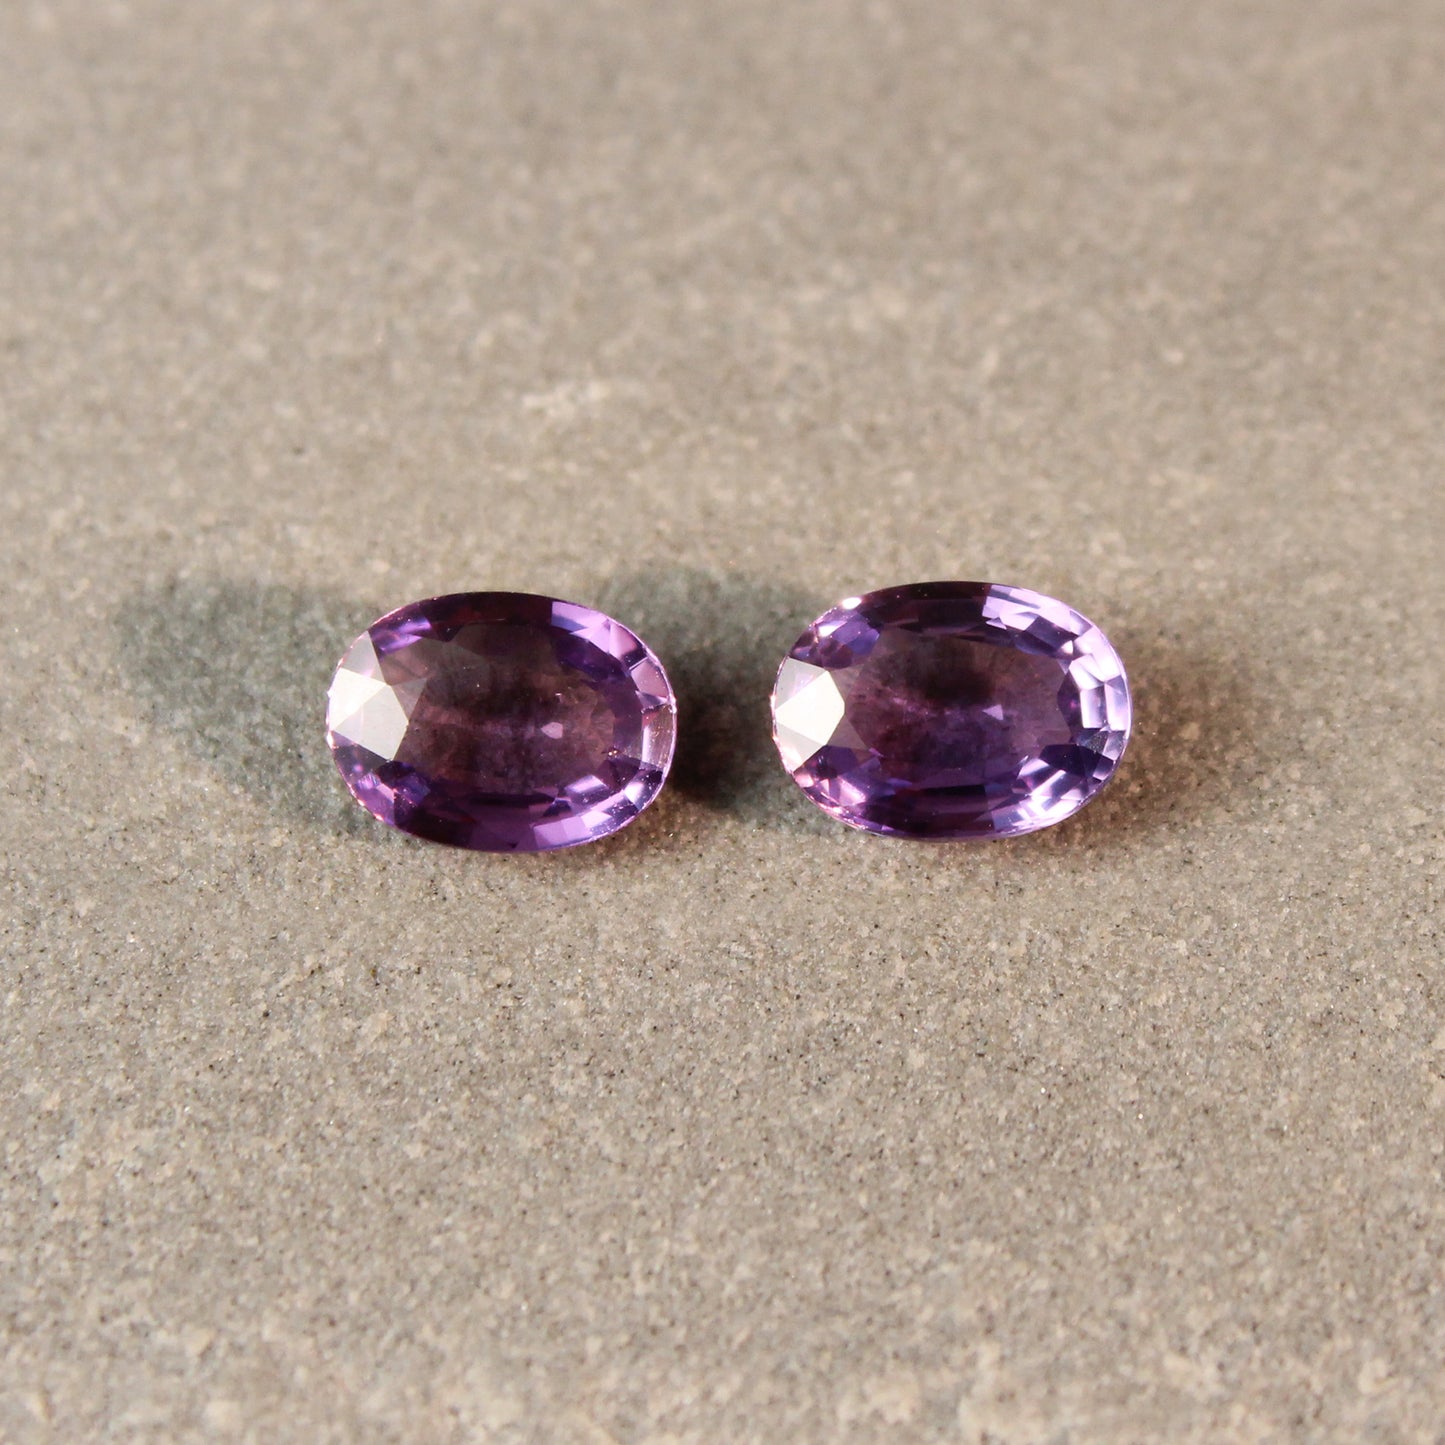 1.86ct Purple, Oval Sapphire Pair, No Heat, Madagascar - 7.00 x 5.20mm